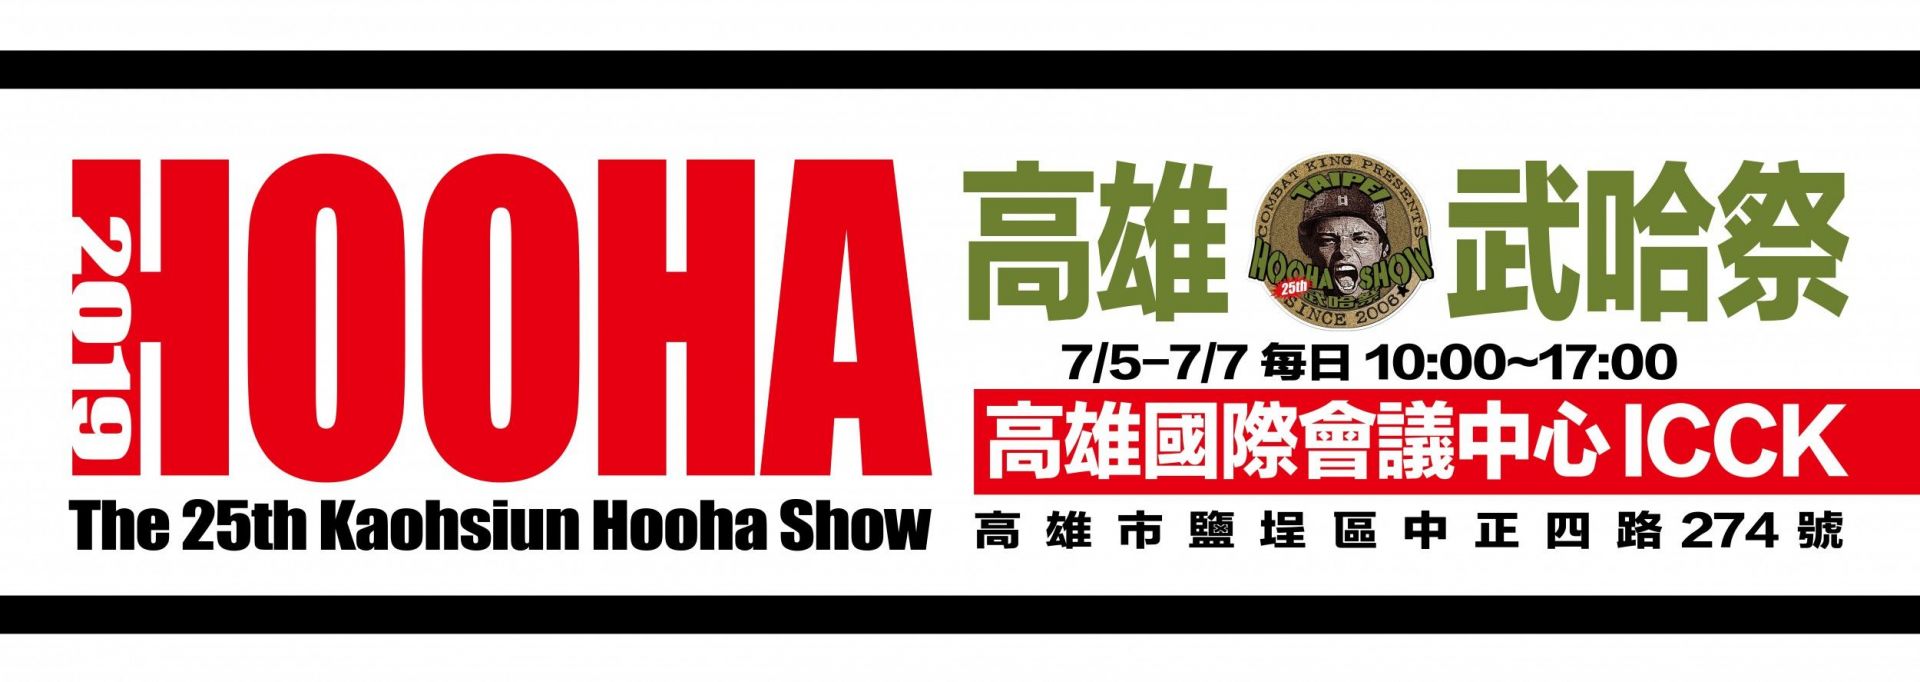 2019 Hooha Show 25th @Kaohsiung